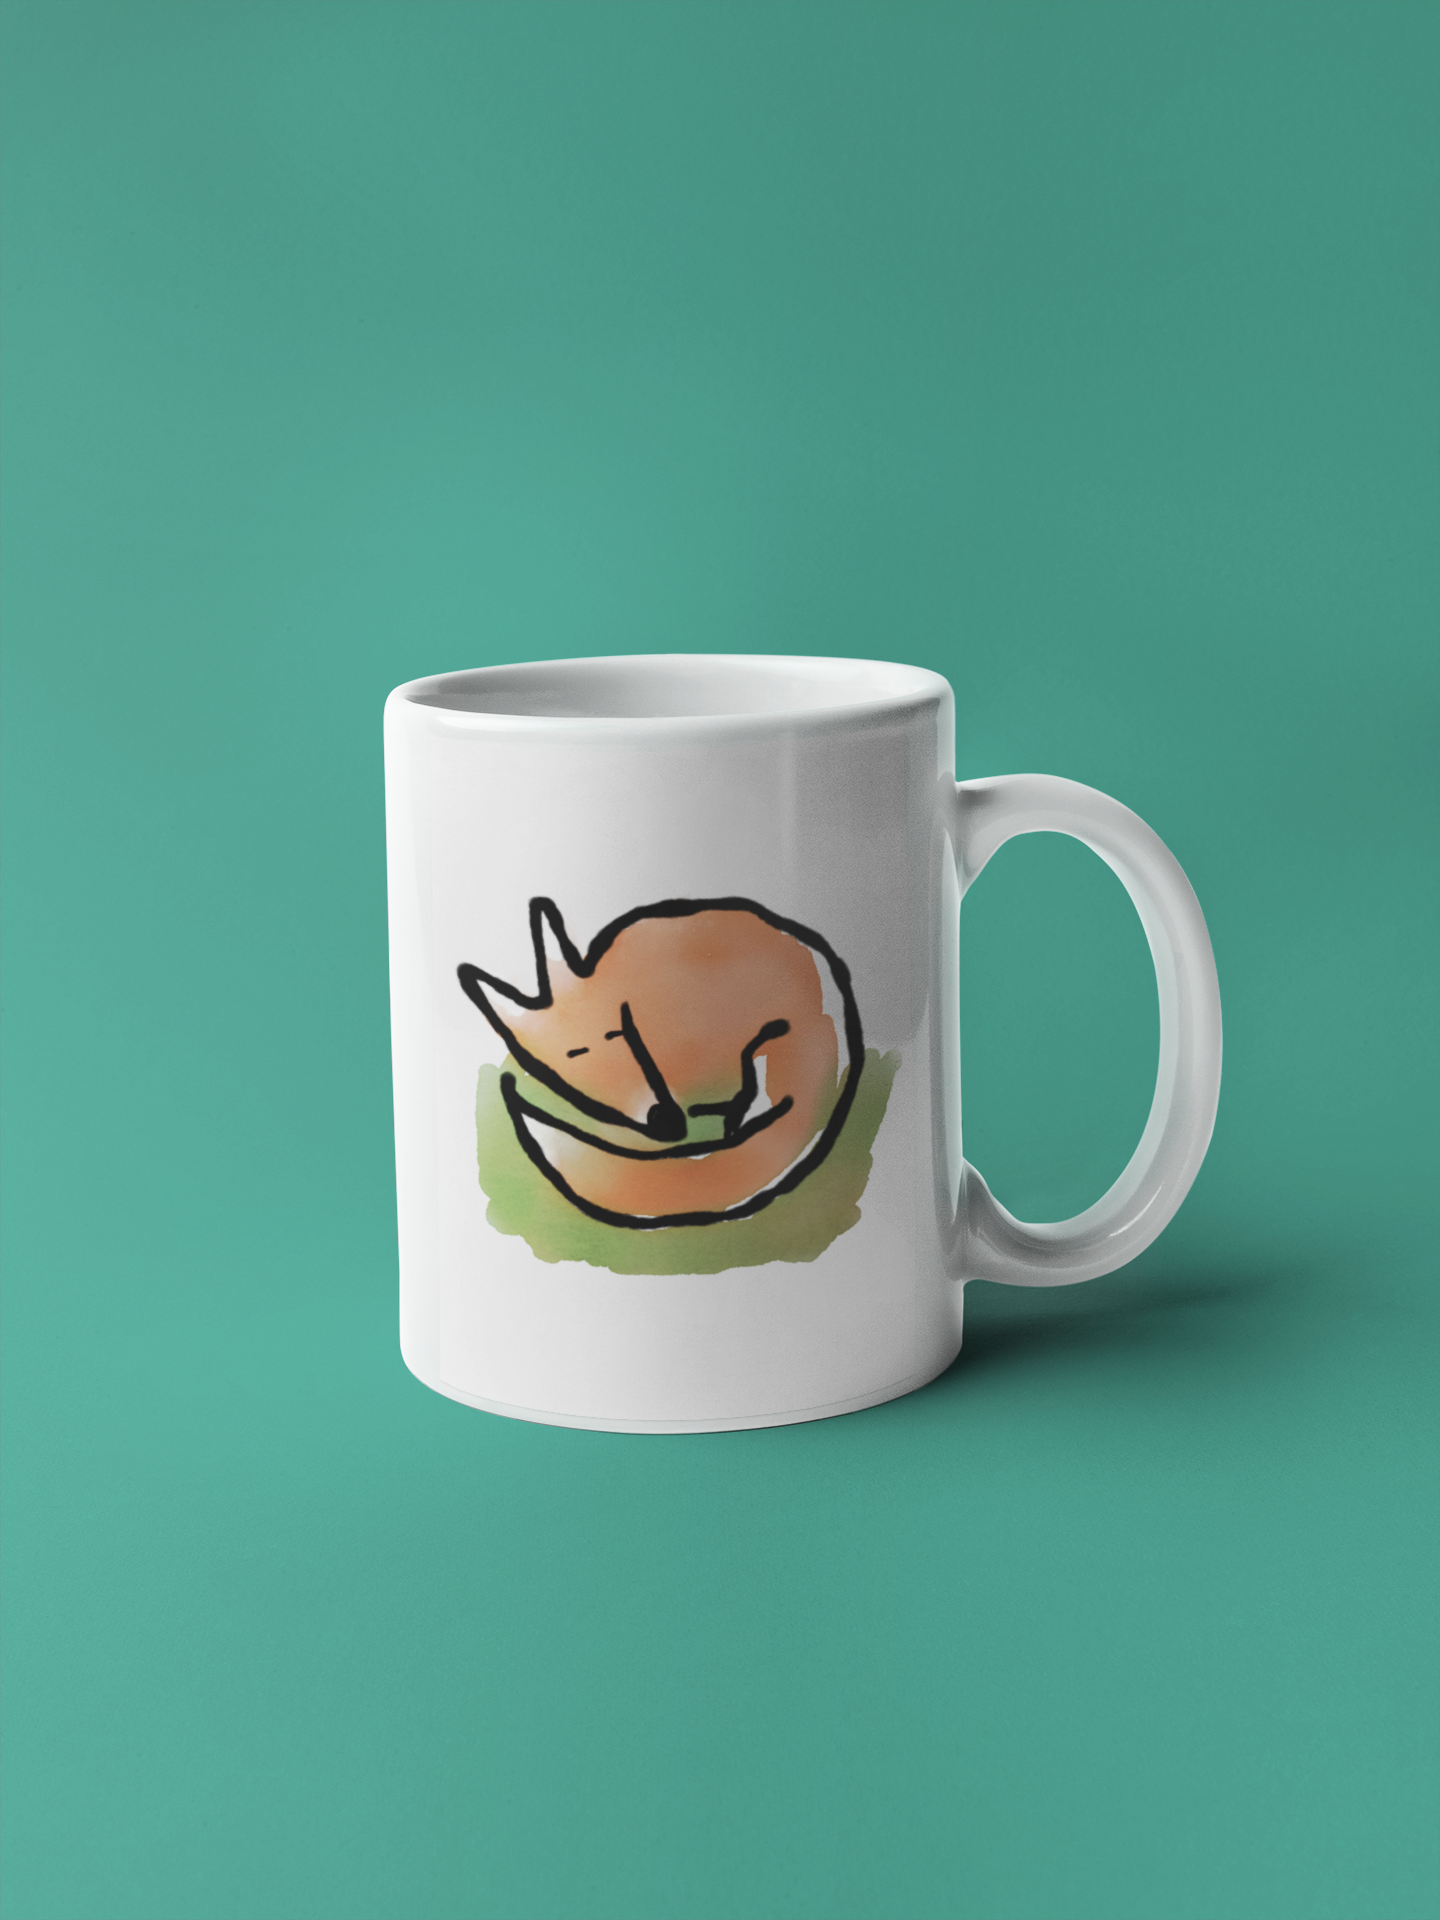 Sleeping Fox mug - Original illustrated Fox coffee mug by Hector and Bone 